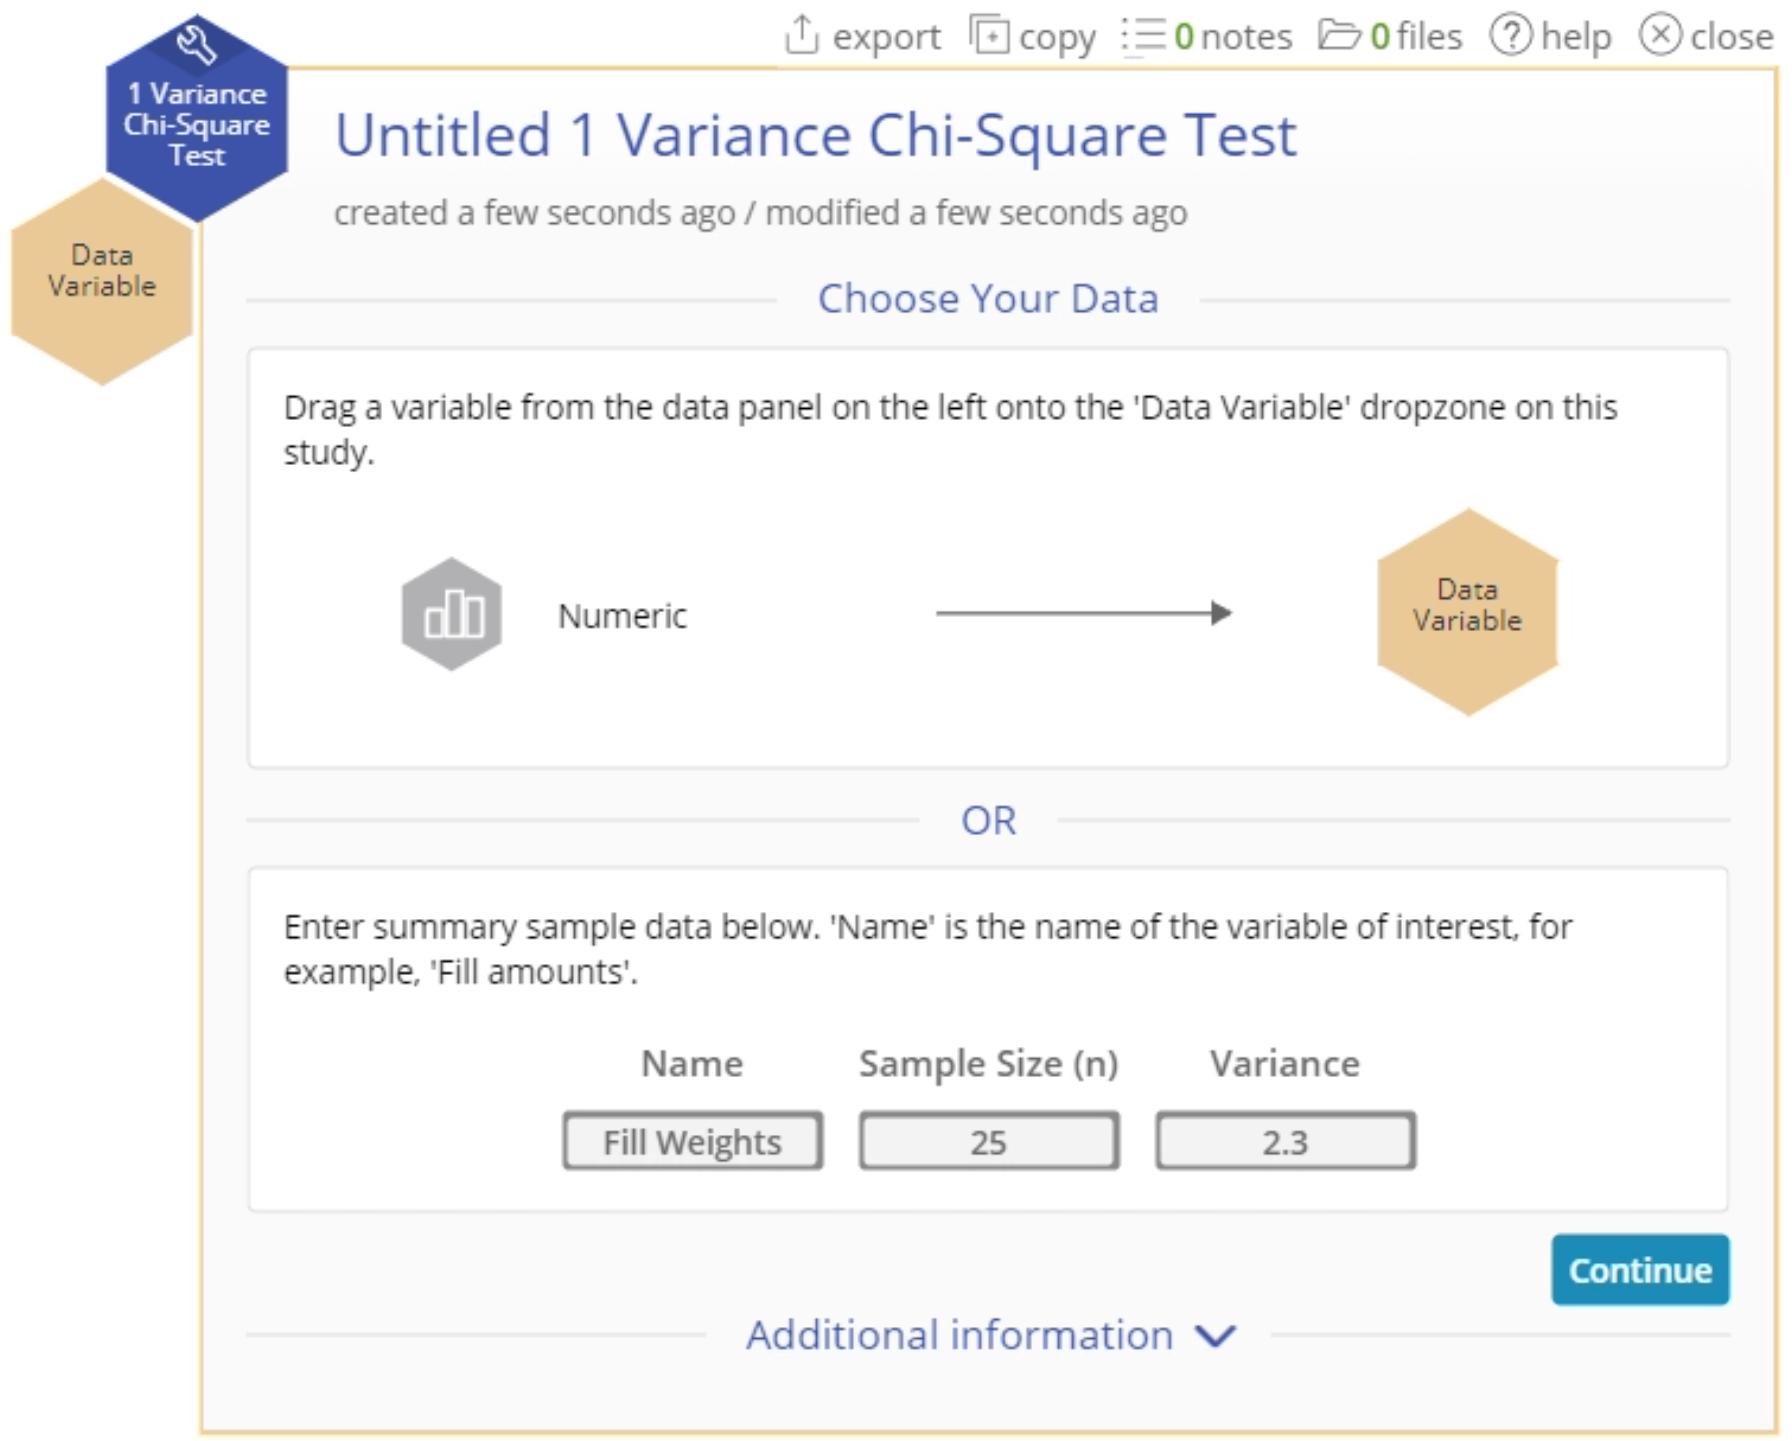 1 variance summary data example